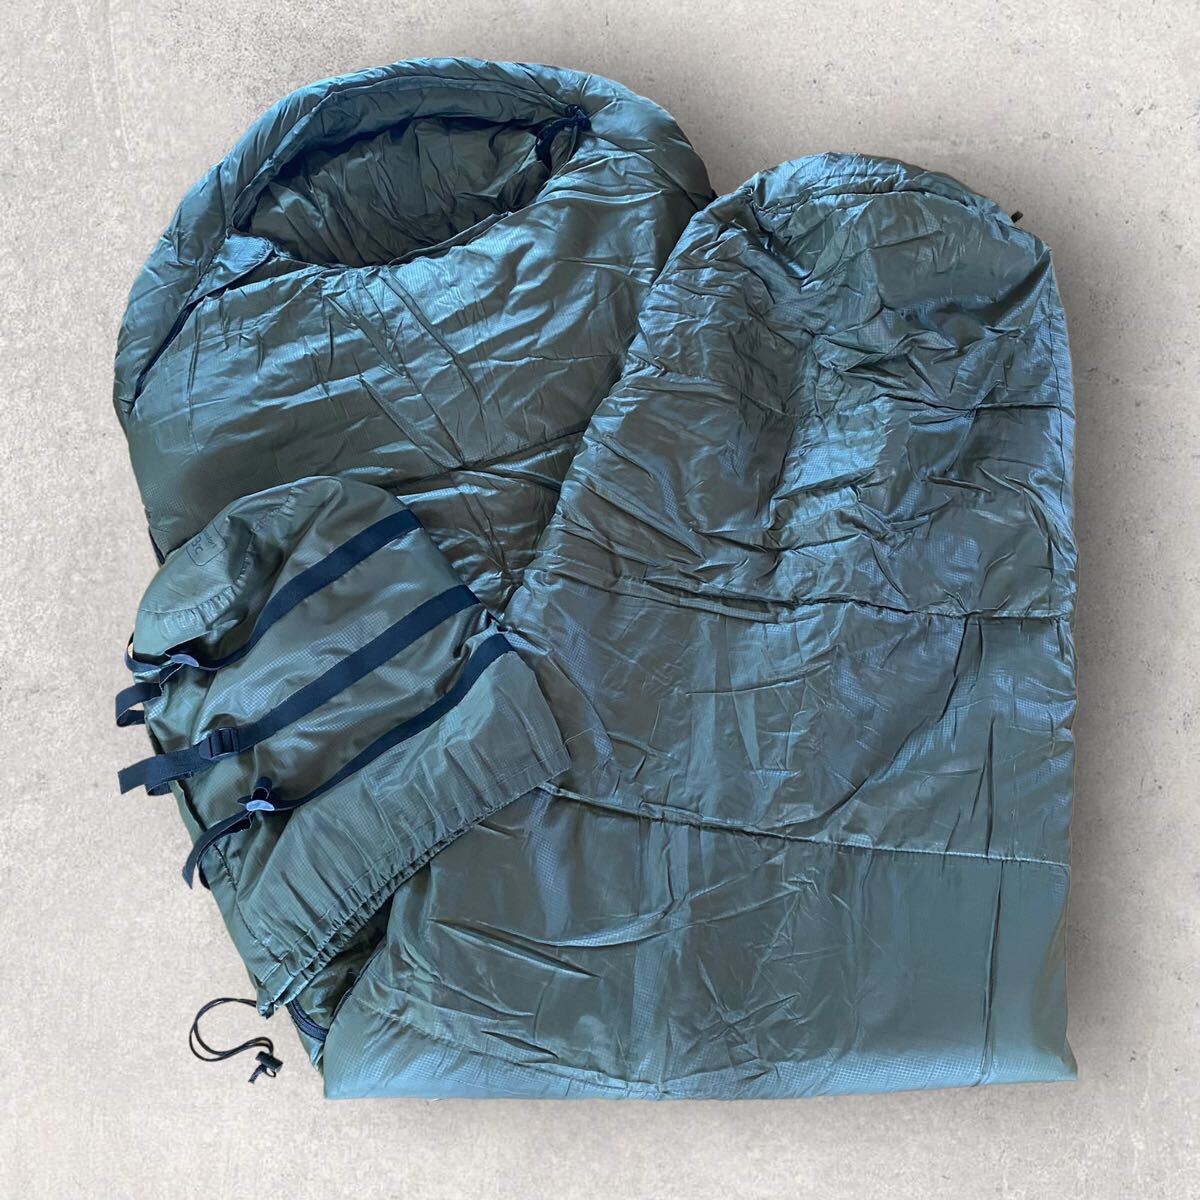 APORITOa poly- to mummy type sleeping bag sleeping bag outdoor goods camp supplies SLEEPING BAG double fastener 230cm